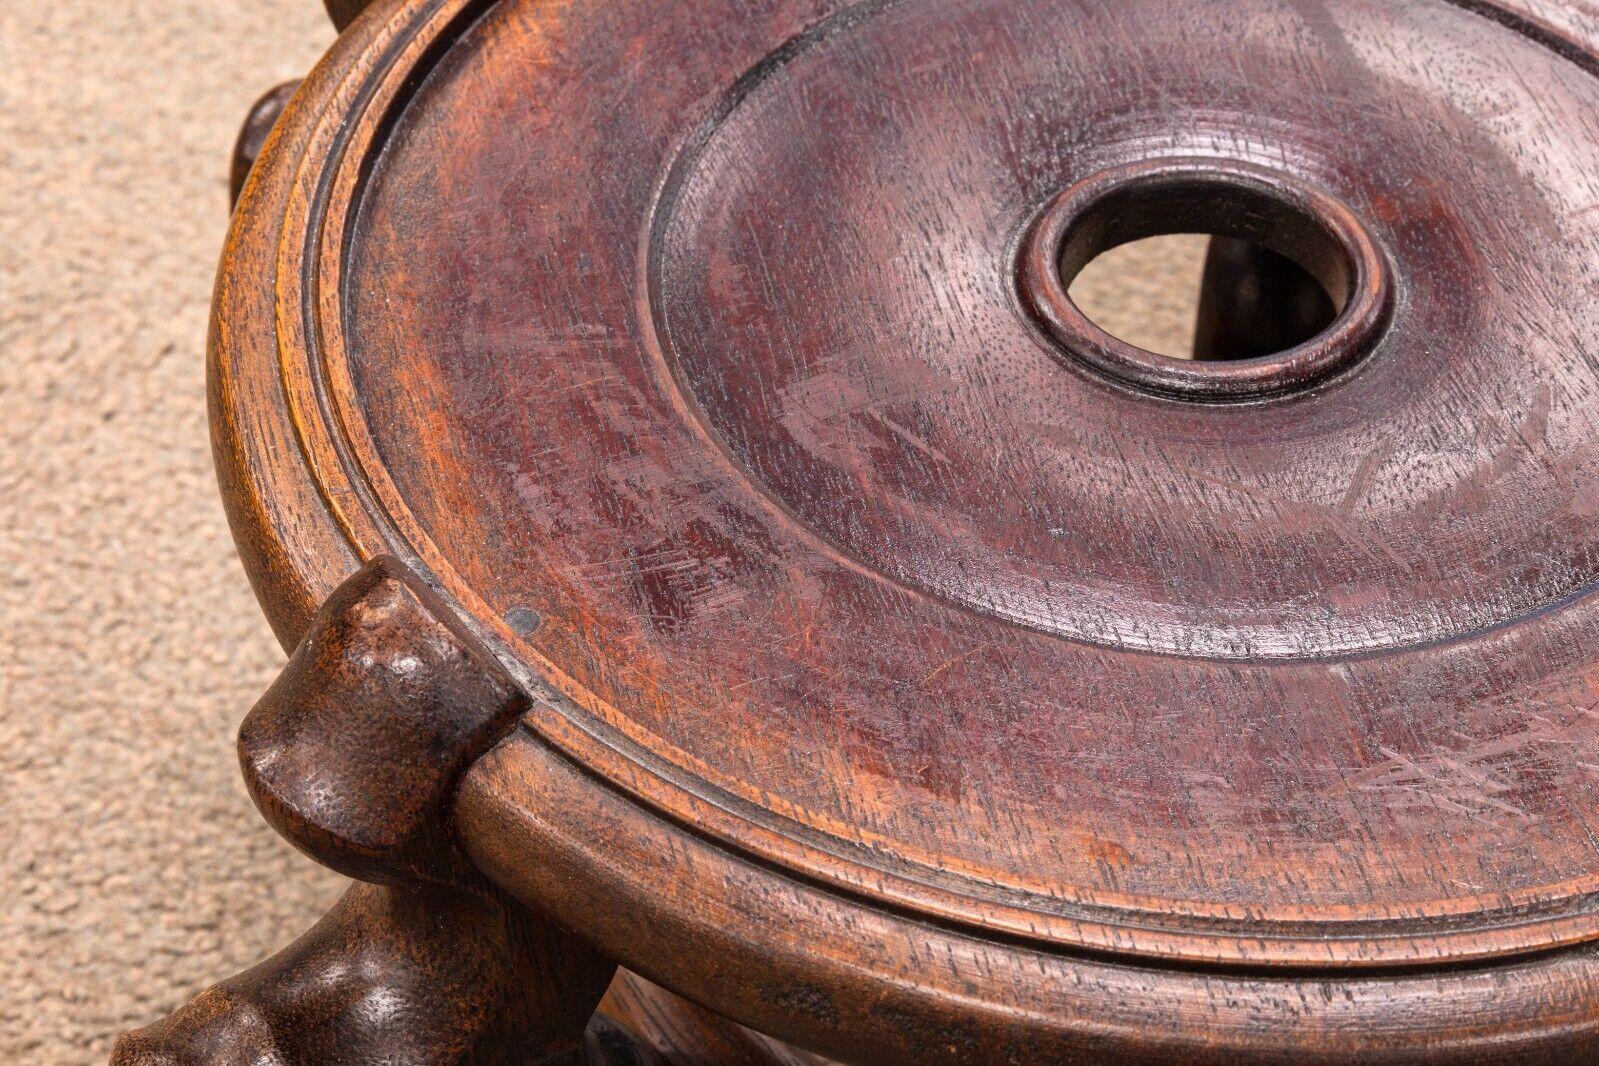 Pair of Modern Asian Urn Floor Ceramic Vases Black Glaze on Ornate Wooden Stands For Sale 5